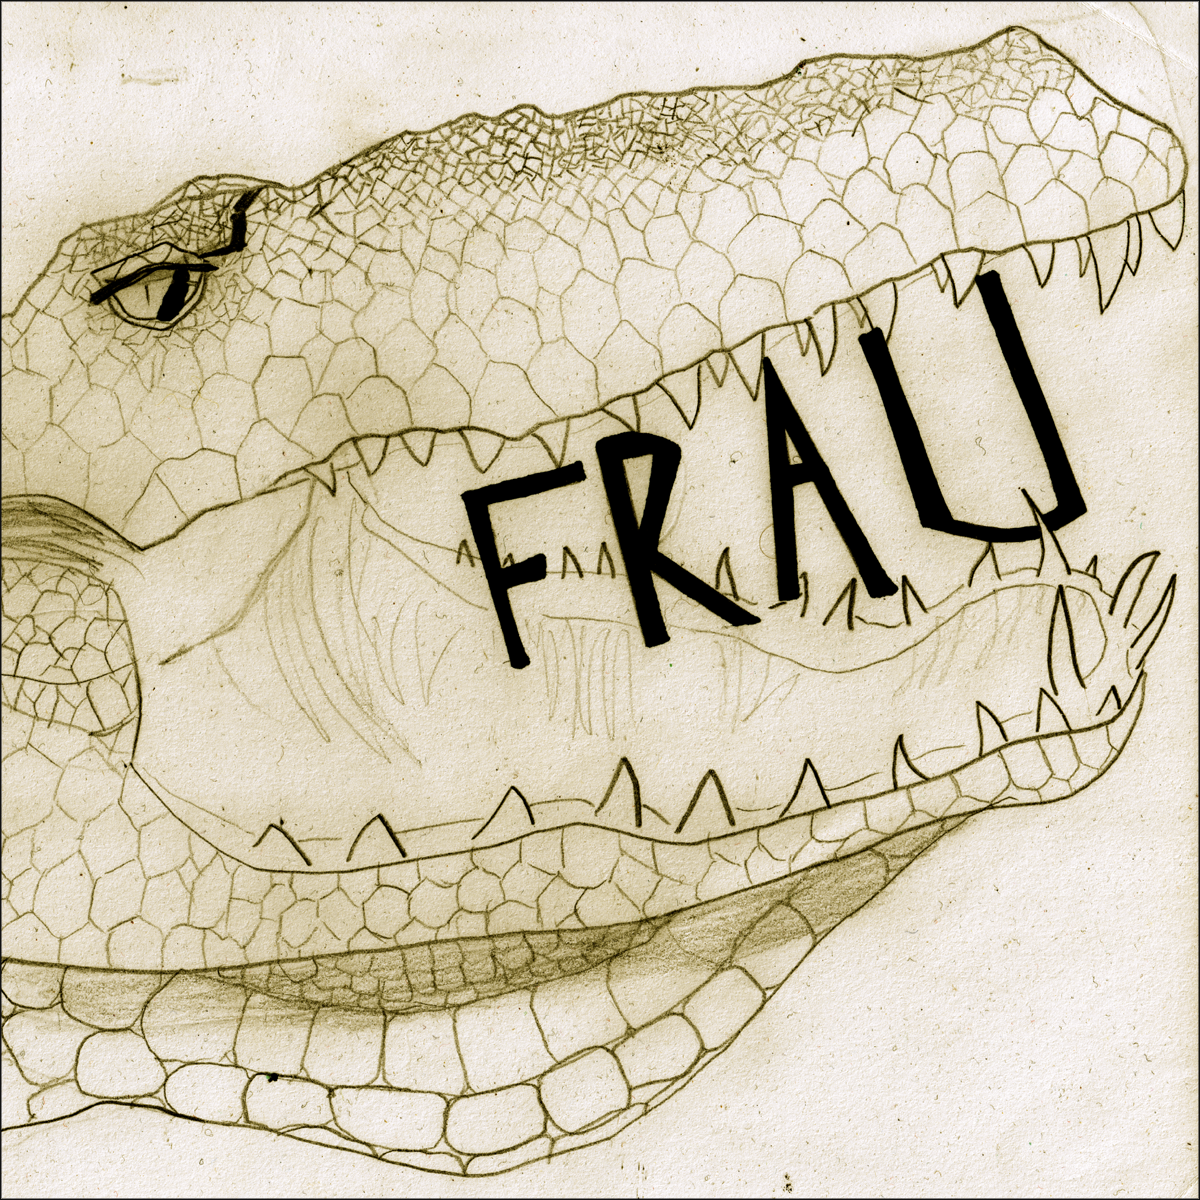 FRAU- S/T LP ~EX GOOD THROB / LTD TO 100 ON GREEN WAX!